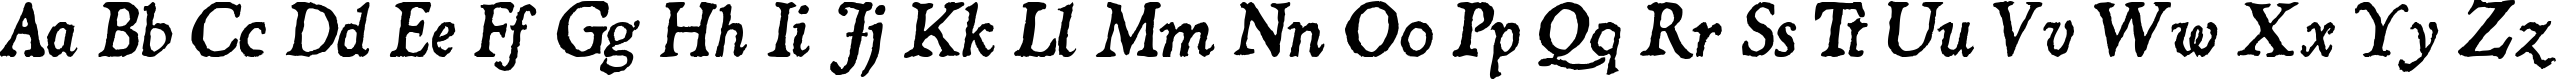 Пример написания английского алфавита шрифтом Dominican  Italic